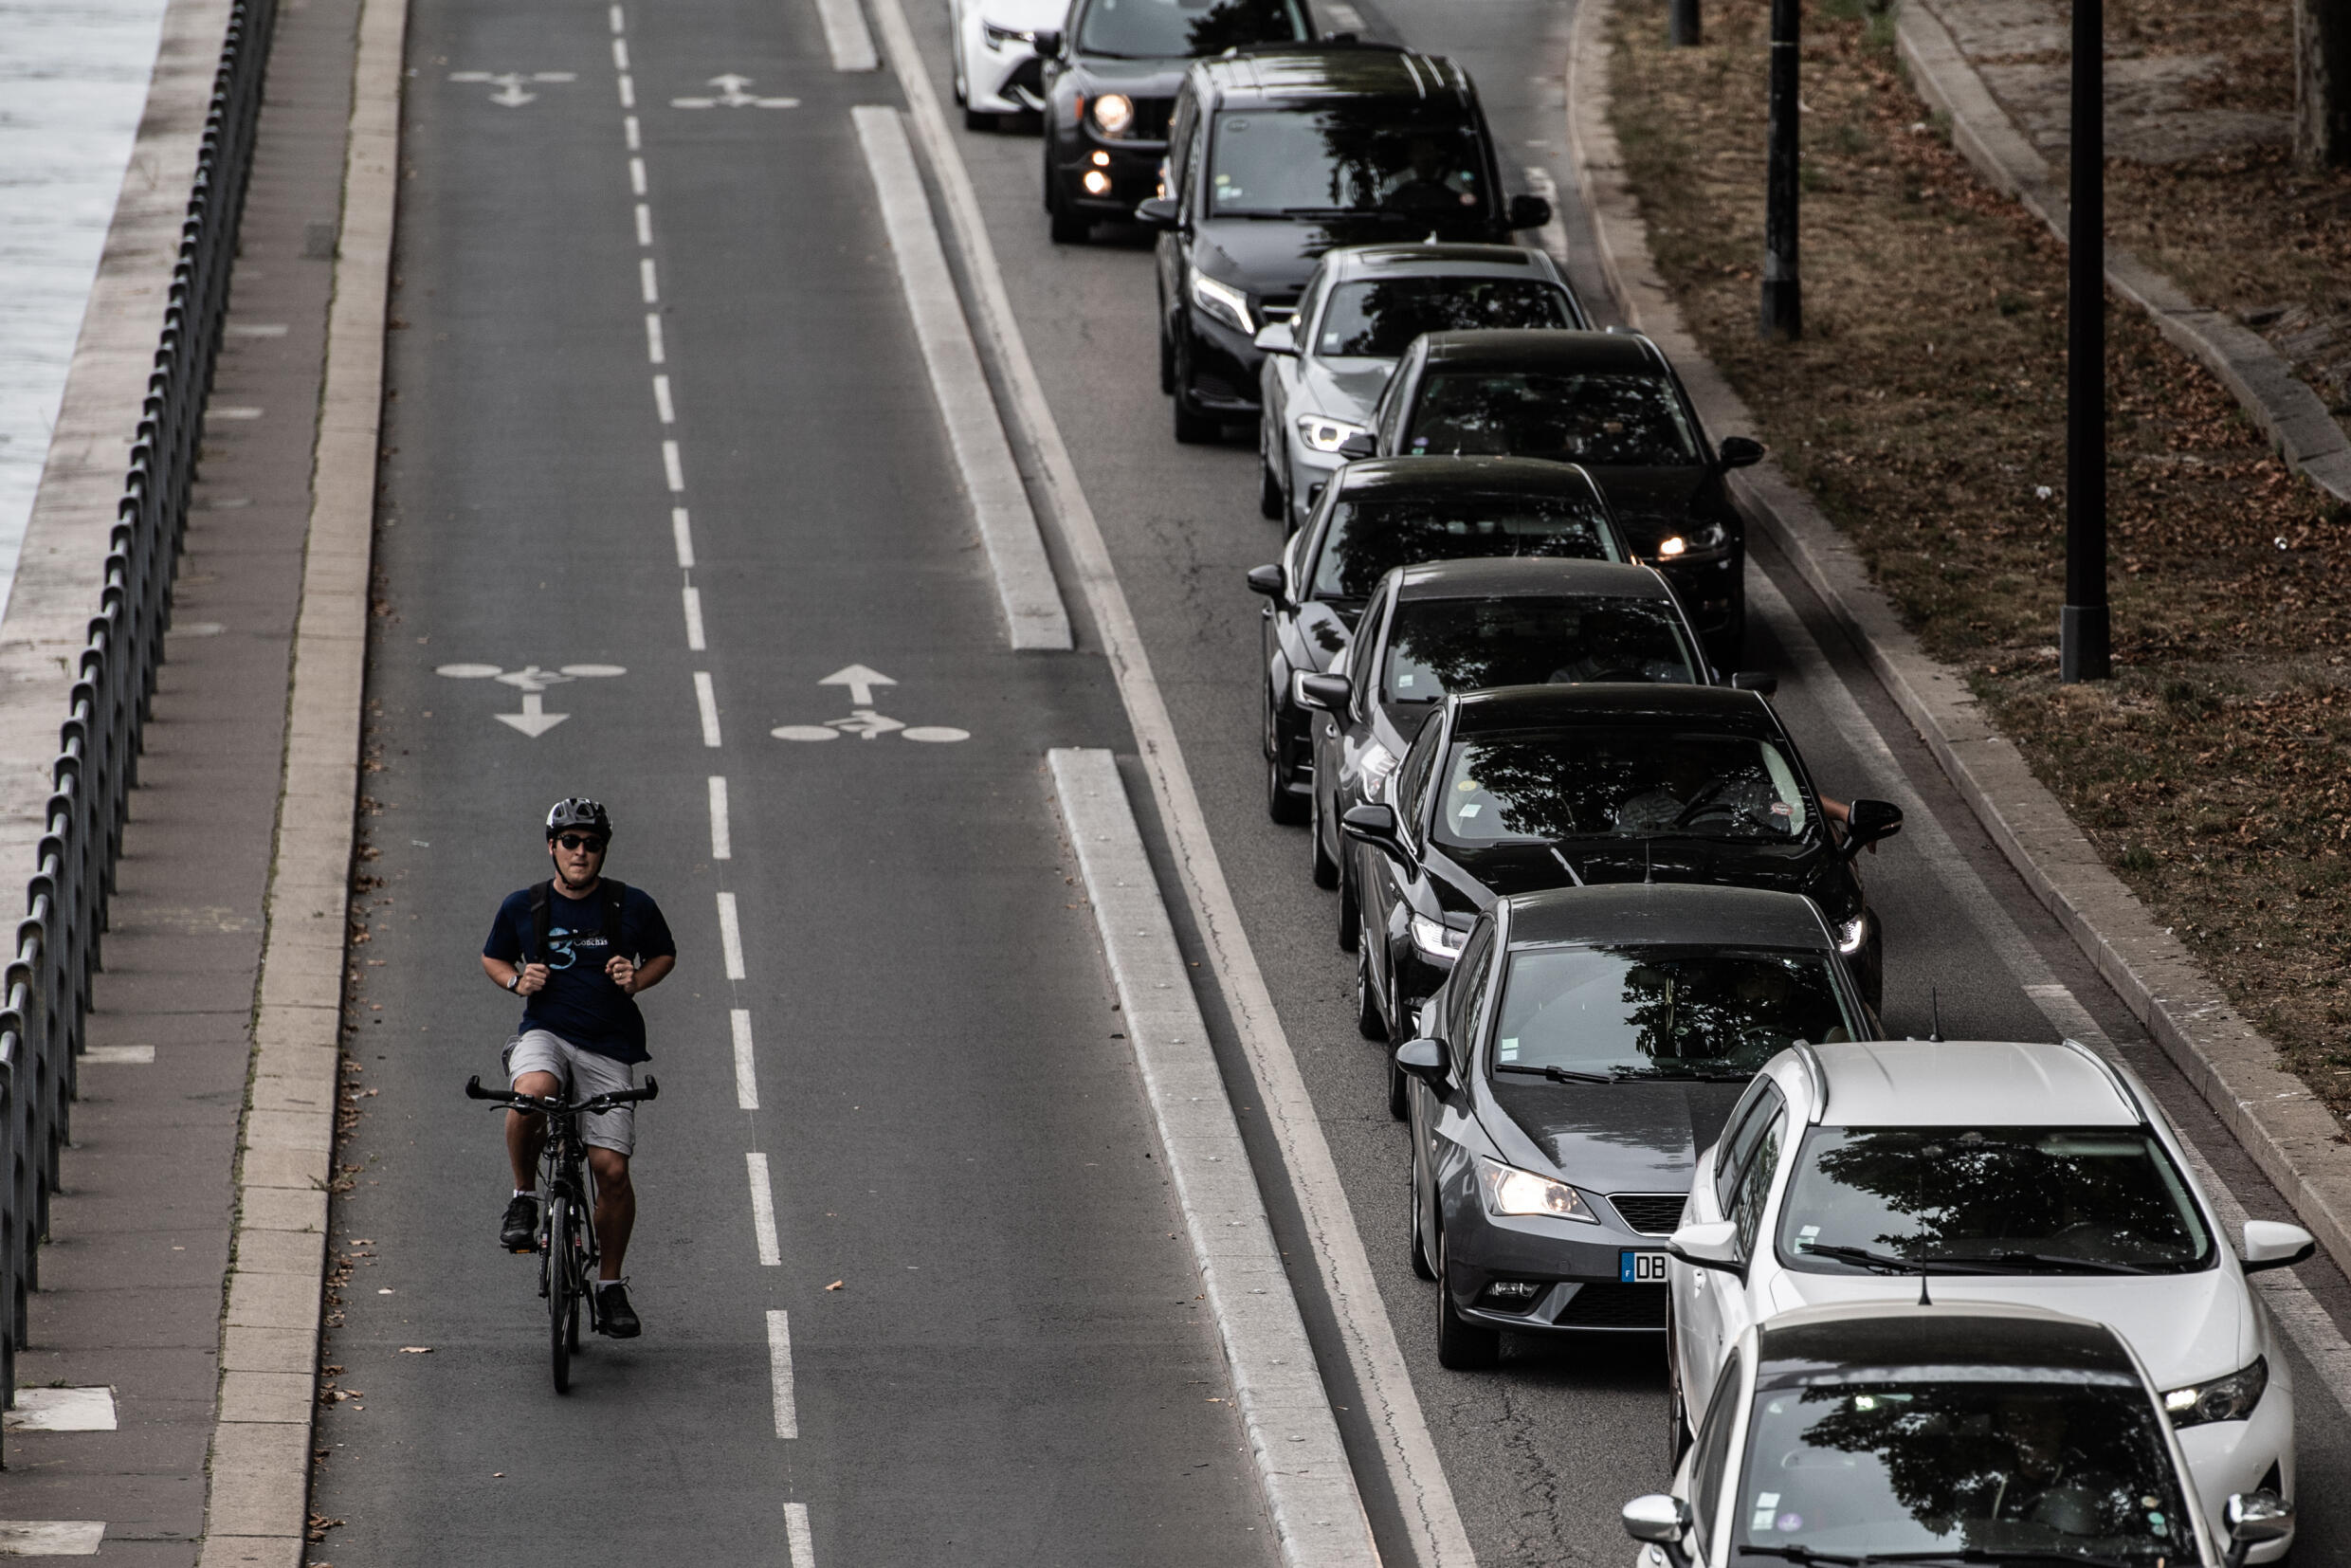 Biking, not driving, is being encouraged in Paris.